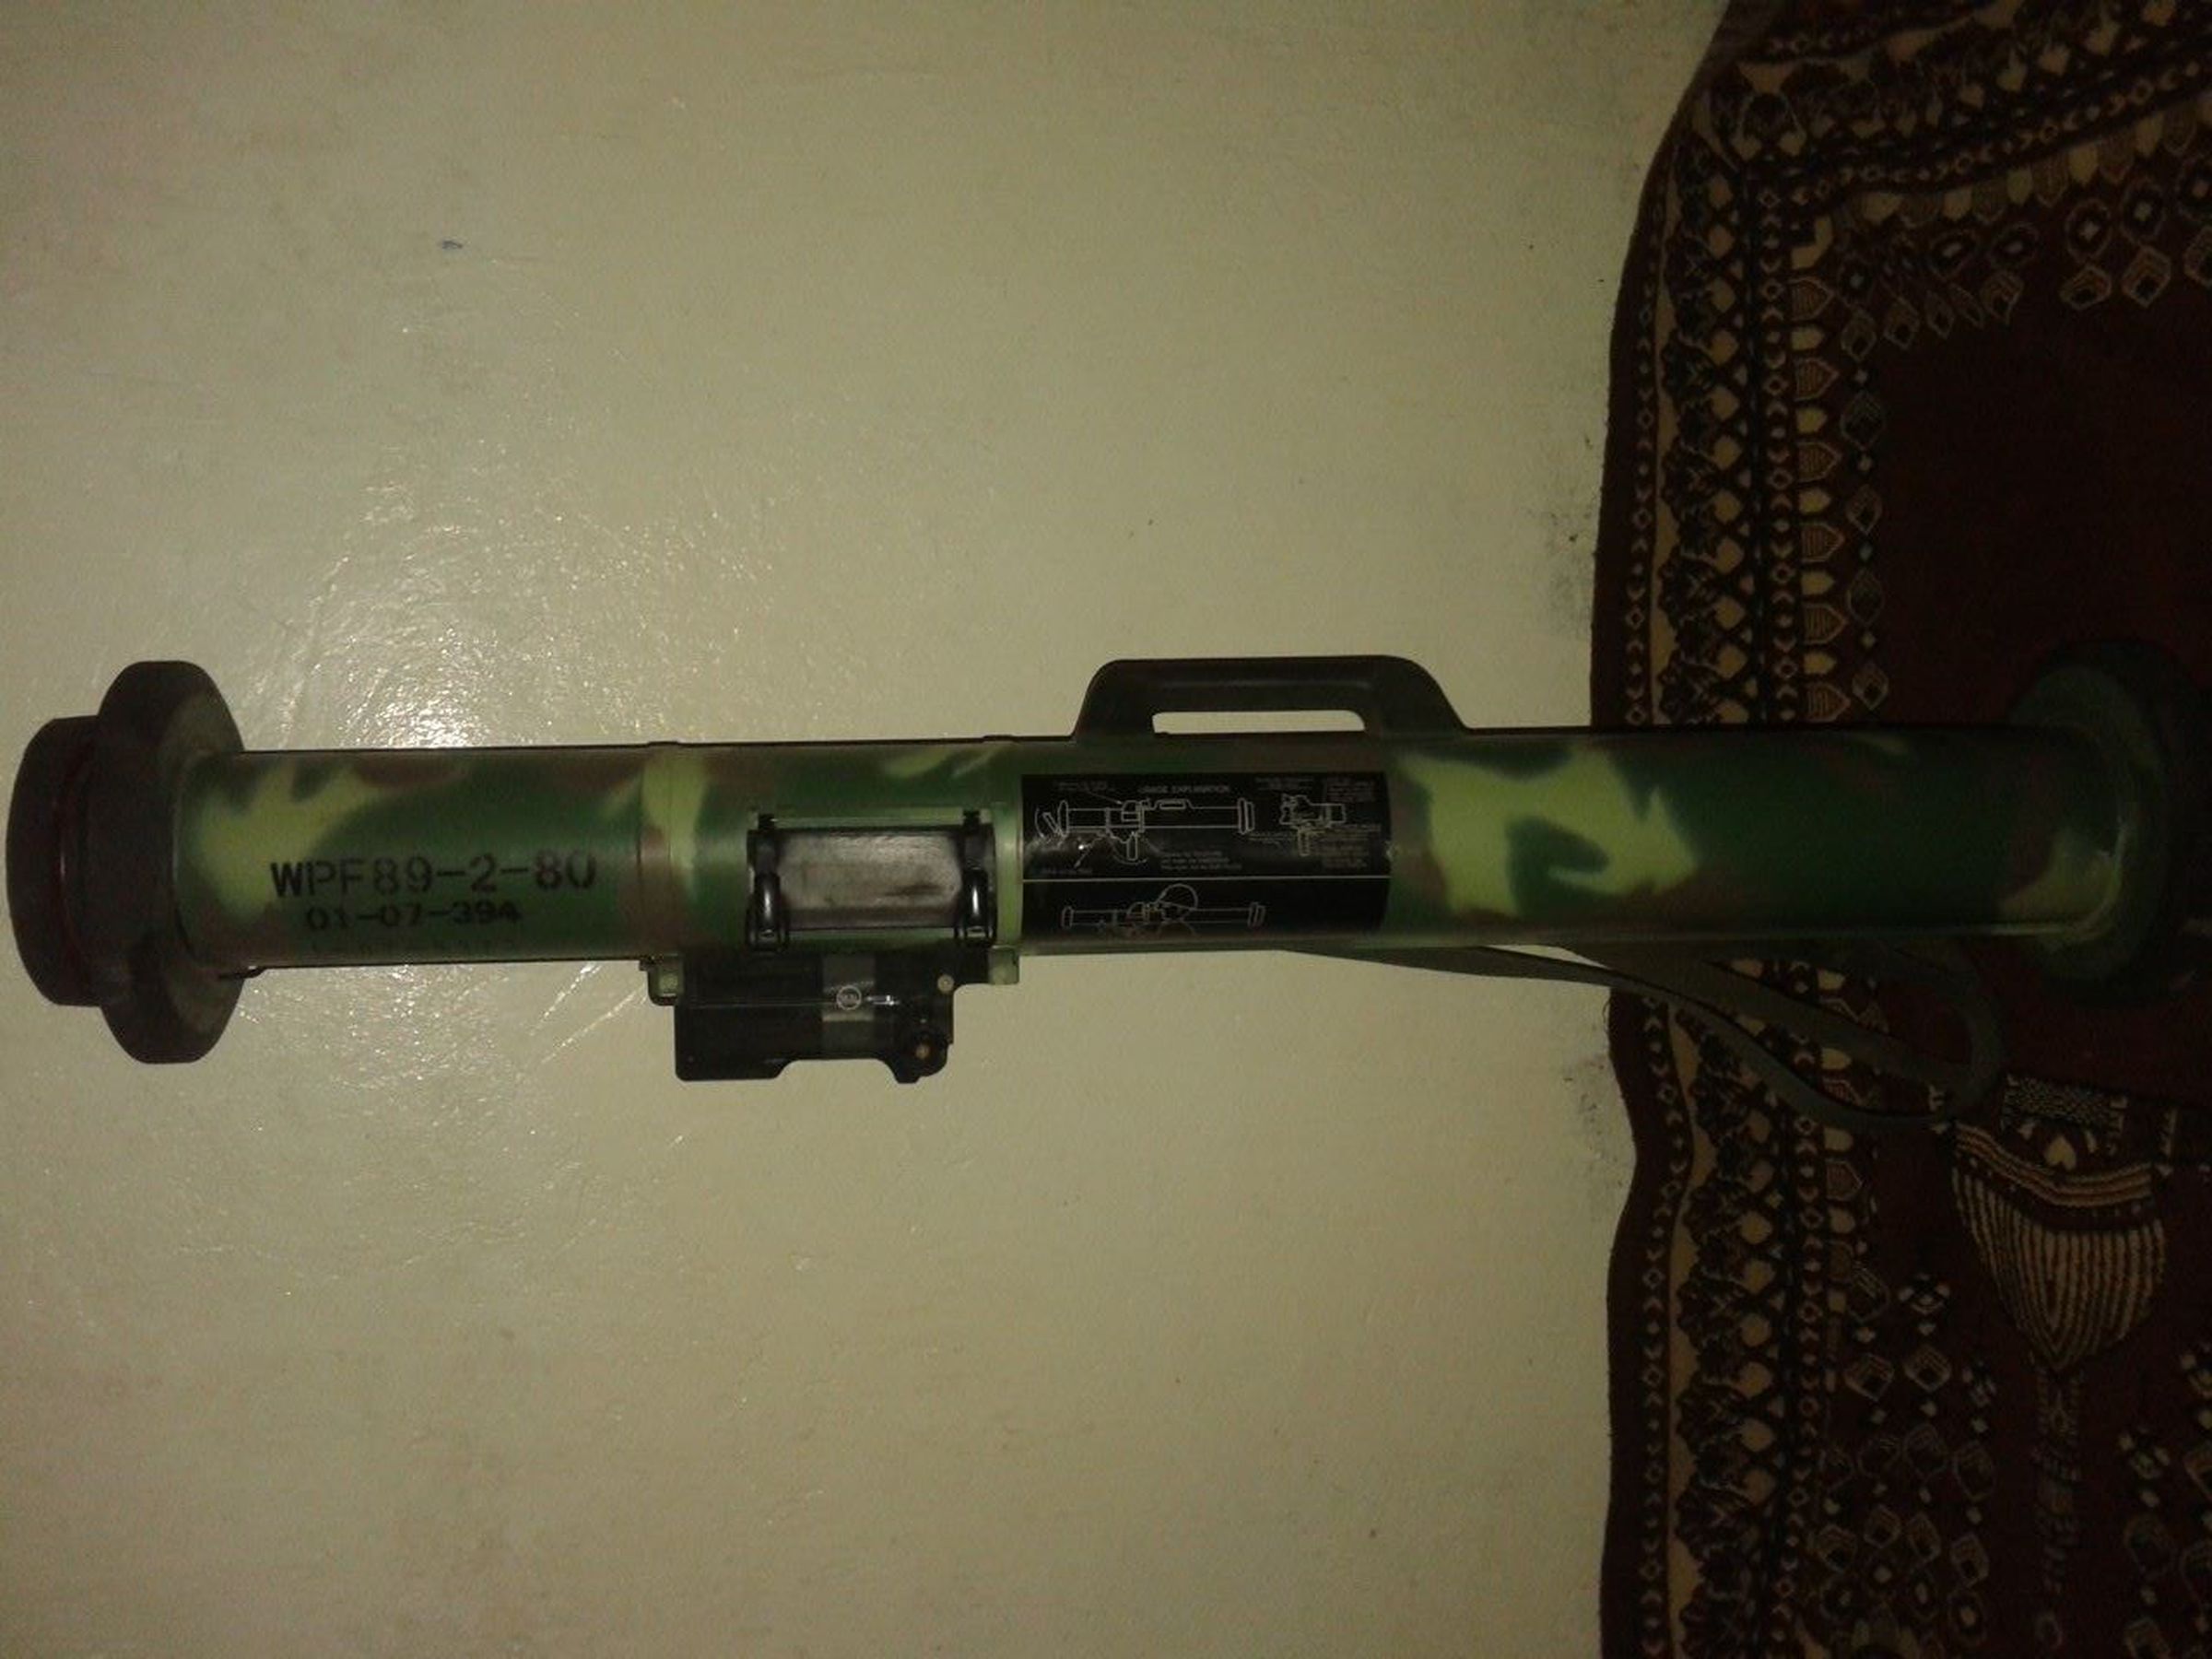 Example weapons sold via social media in Libya